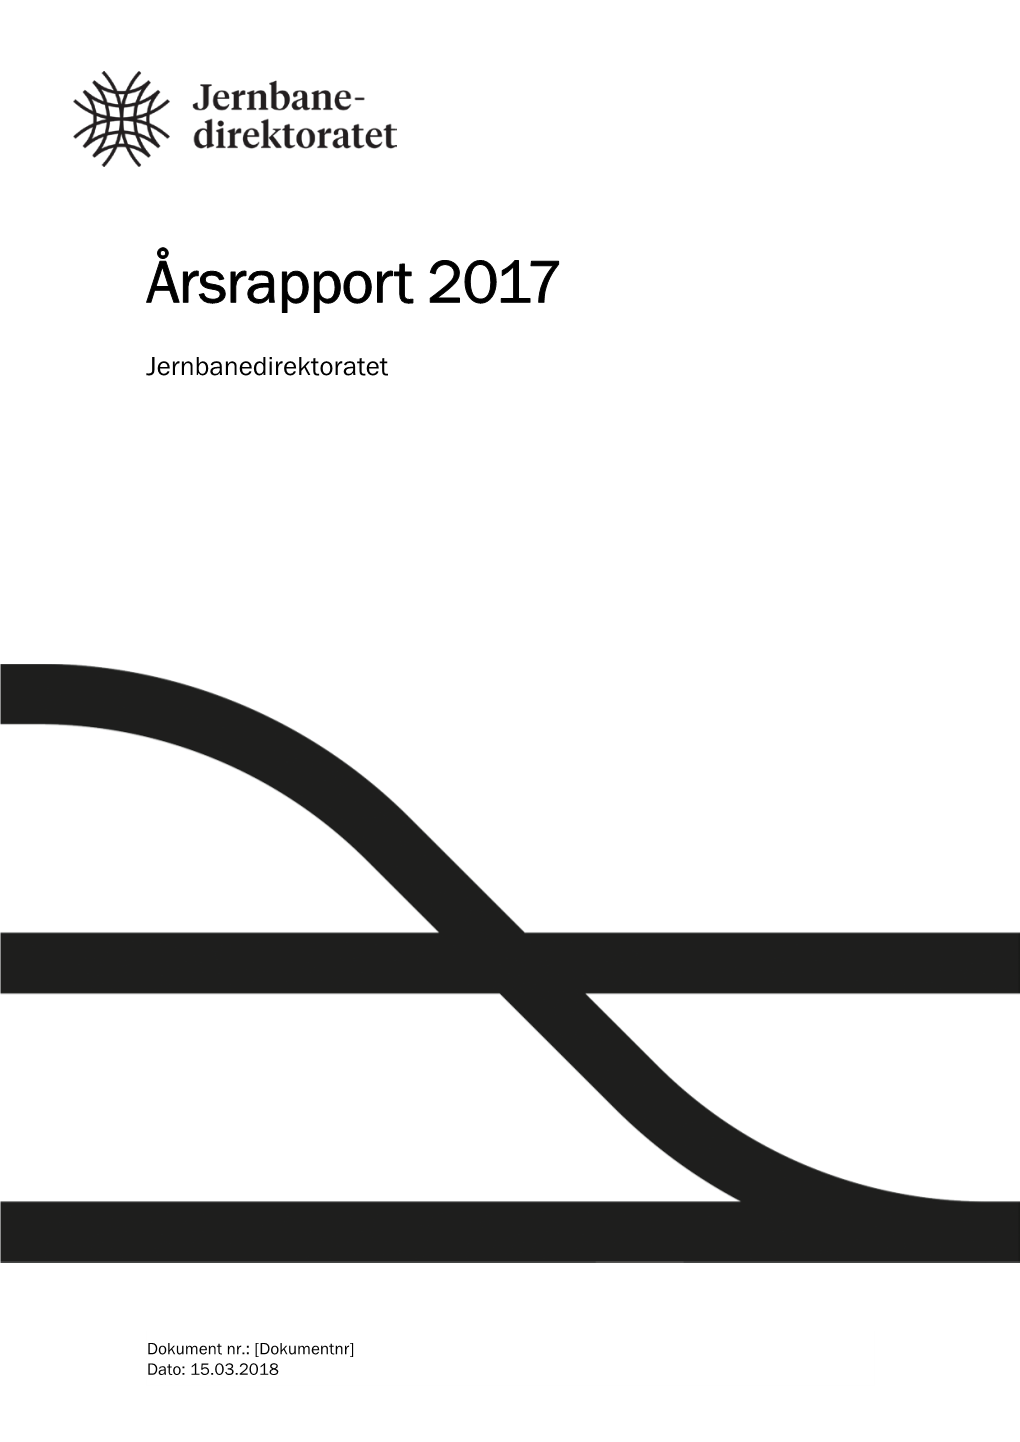 Årsrapport 2017 Jernbanedirektoratet.Pdf